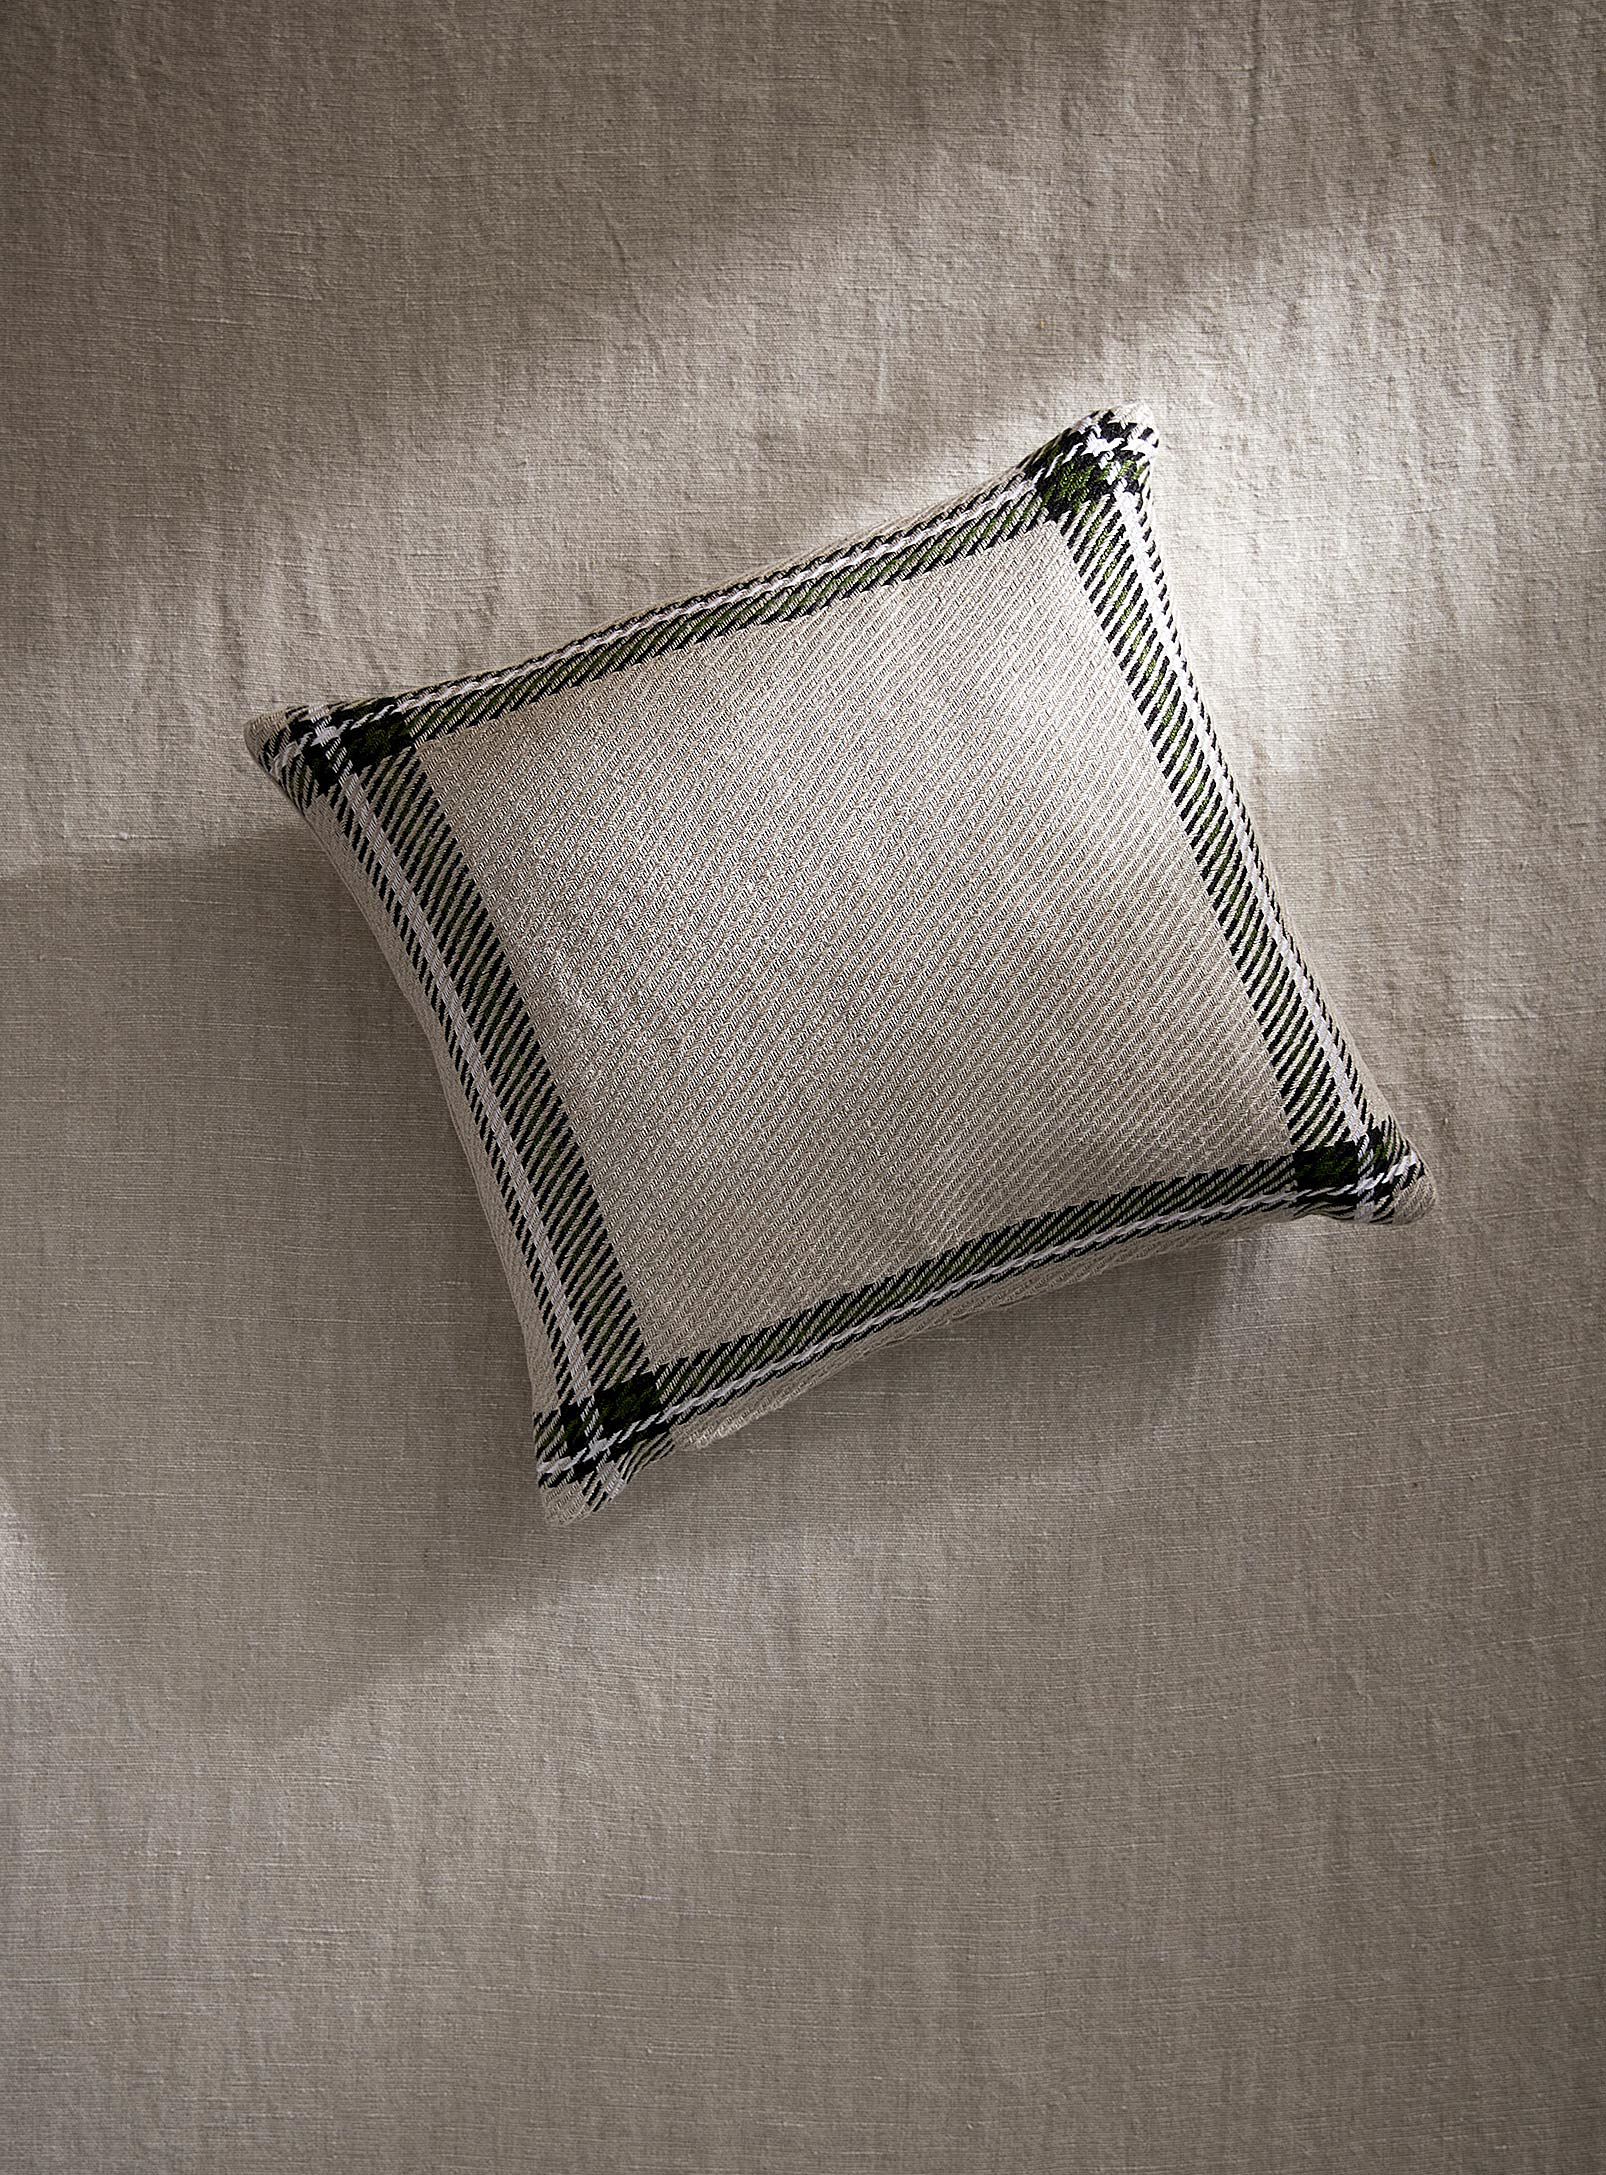 Atelier Monique Ratelle Minimalist Checkers Pure Linen Cushion See Available Sizes In Ecru/linen